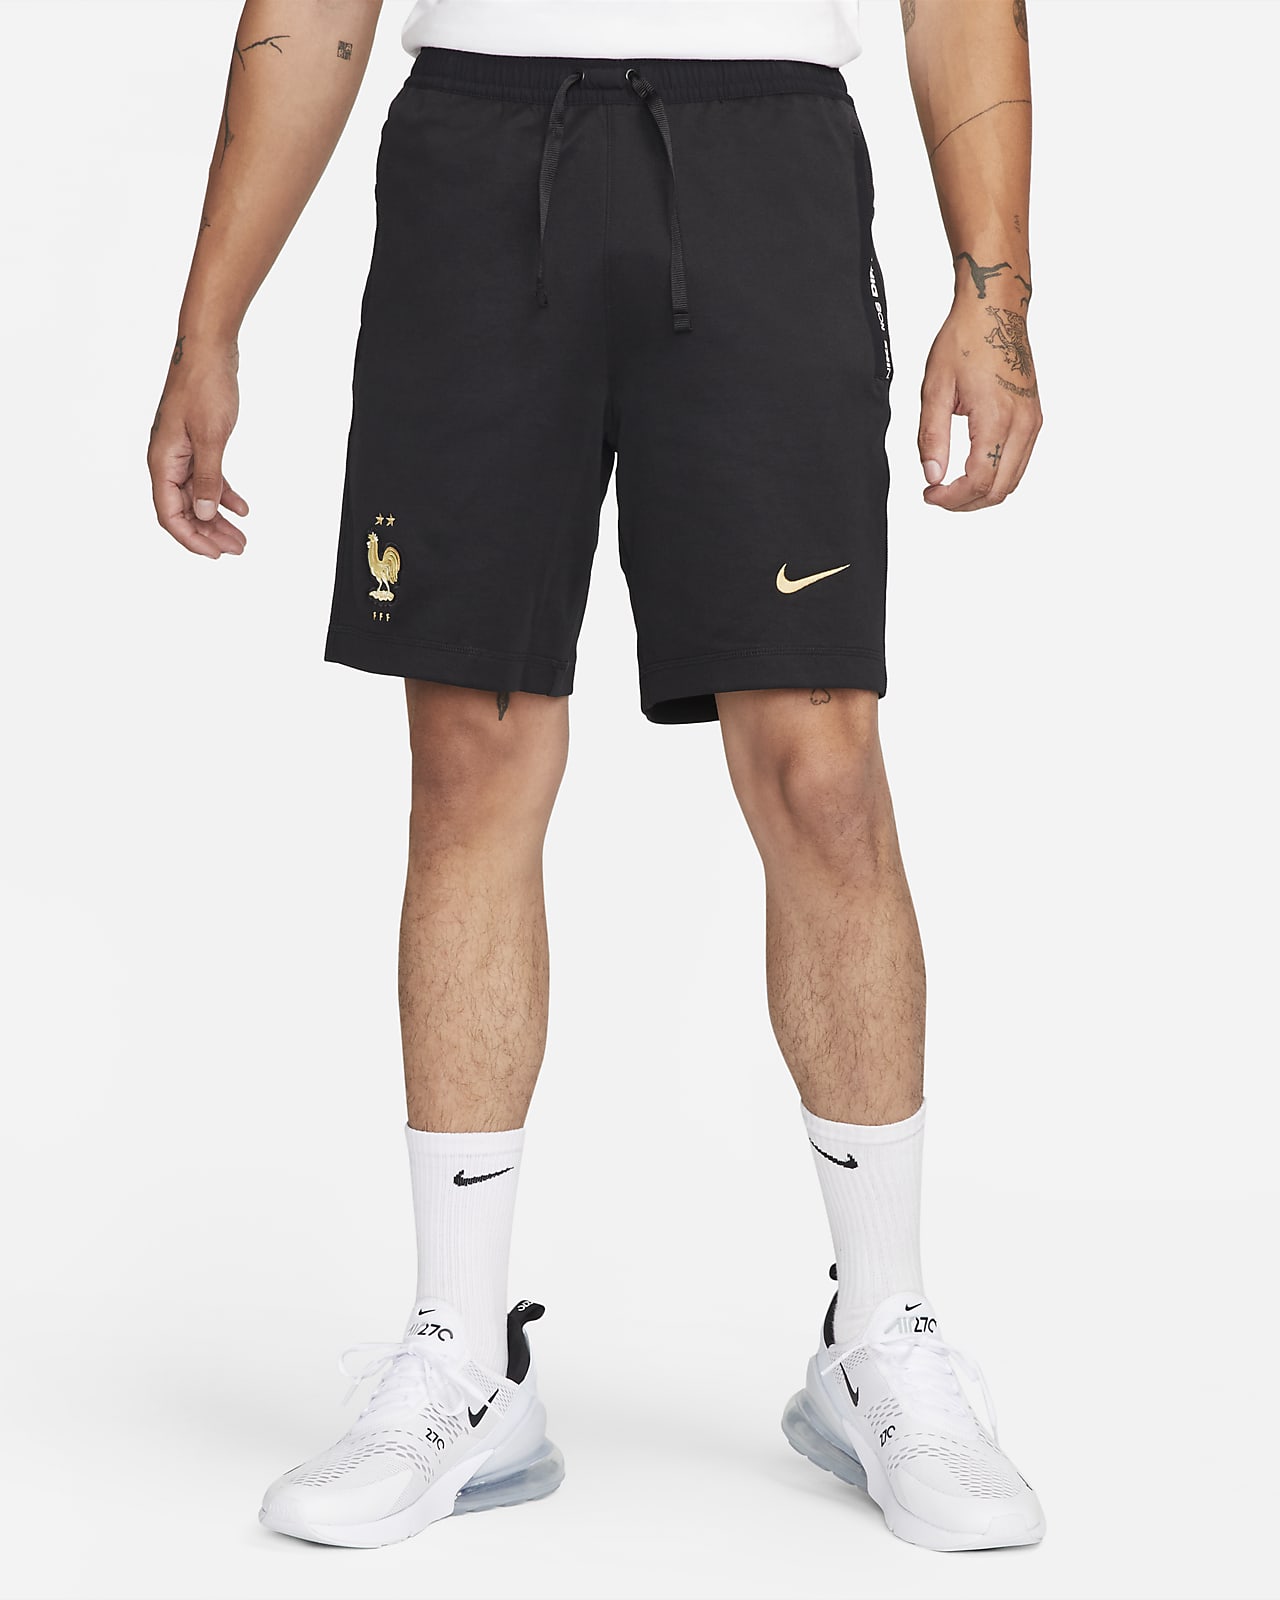 FFF Men's Knit Football Shorts